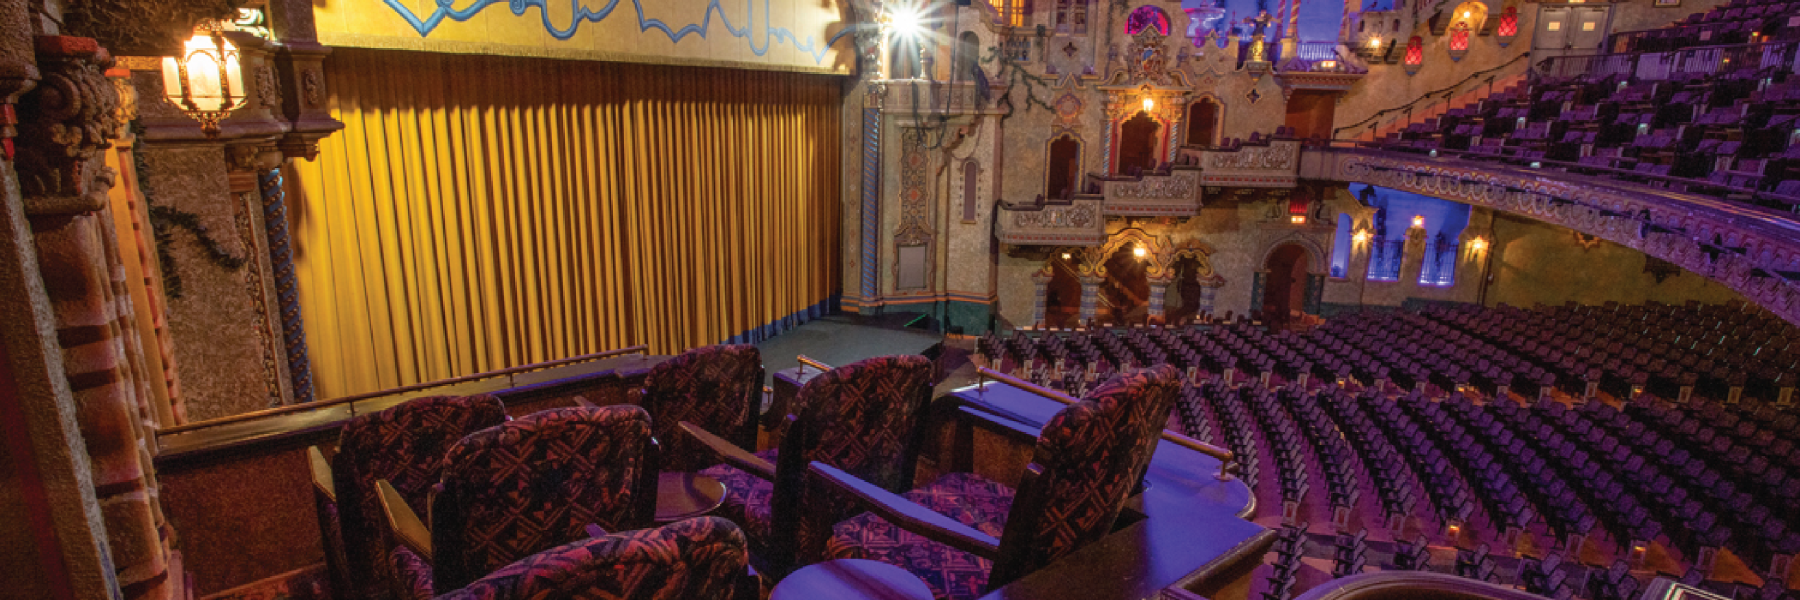 Starlight Suite Membership Experiences Majestic Empire Theatres